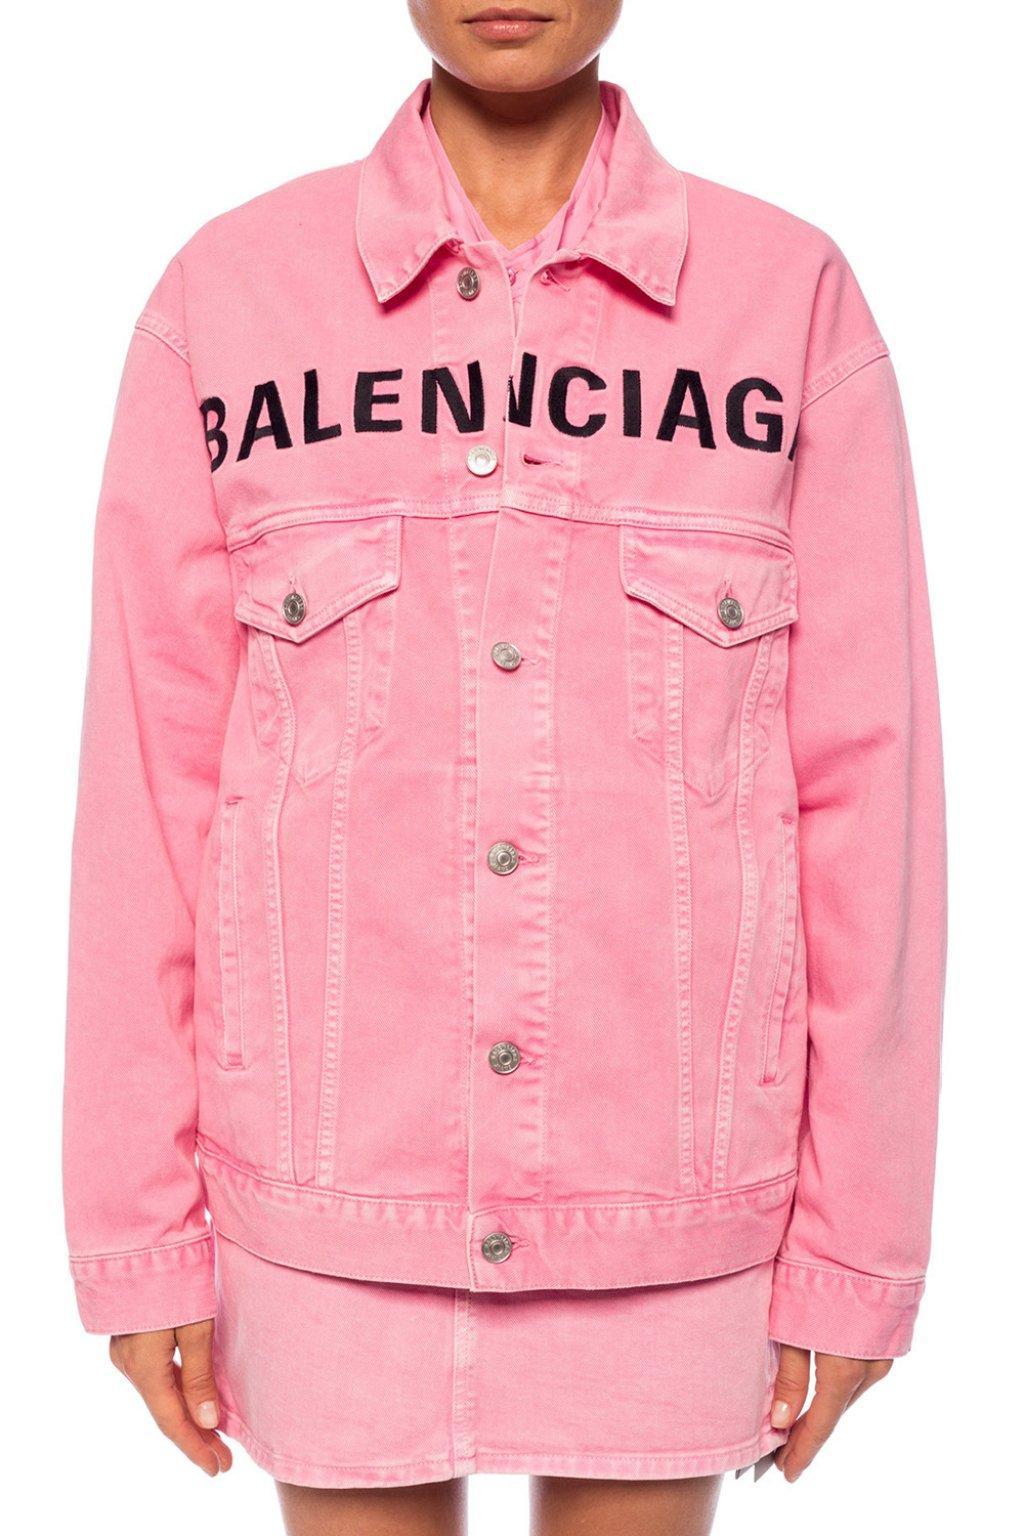 Balenciaga Embroidered Logo Denim Jacket in Pink - Save 12% | Lyst